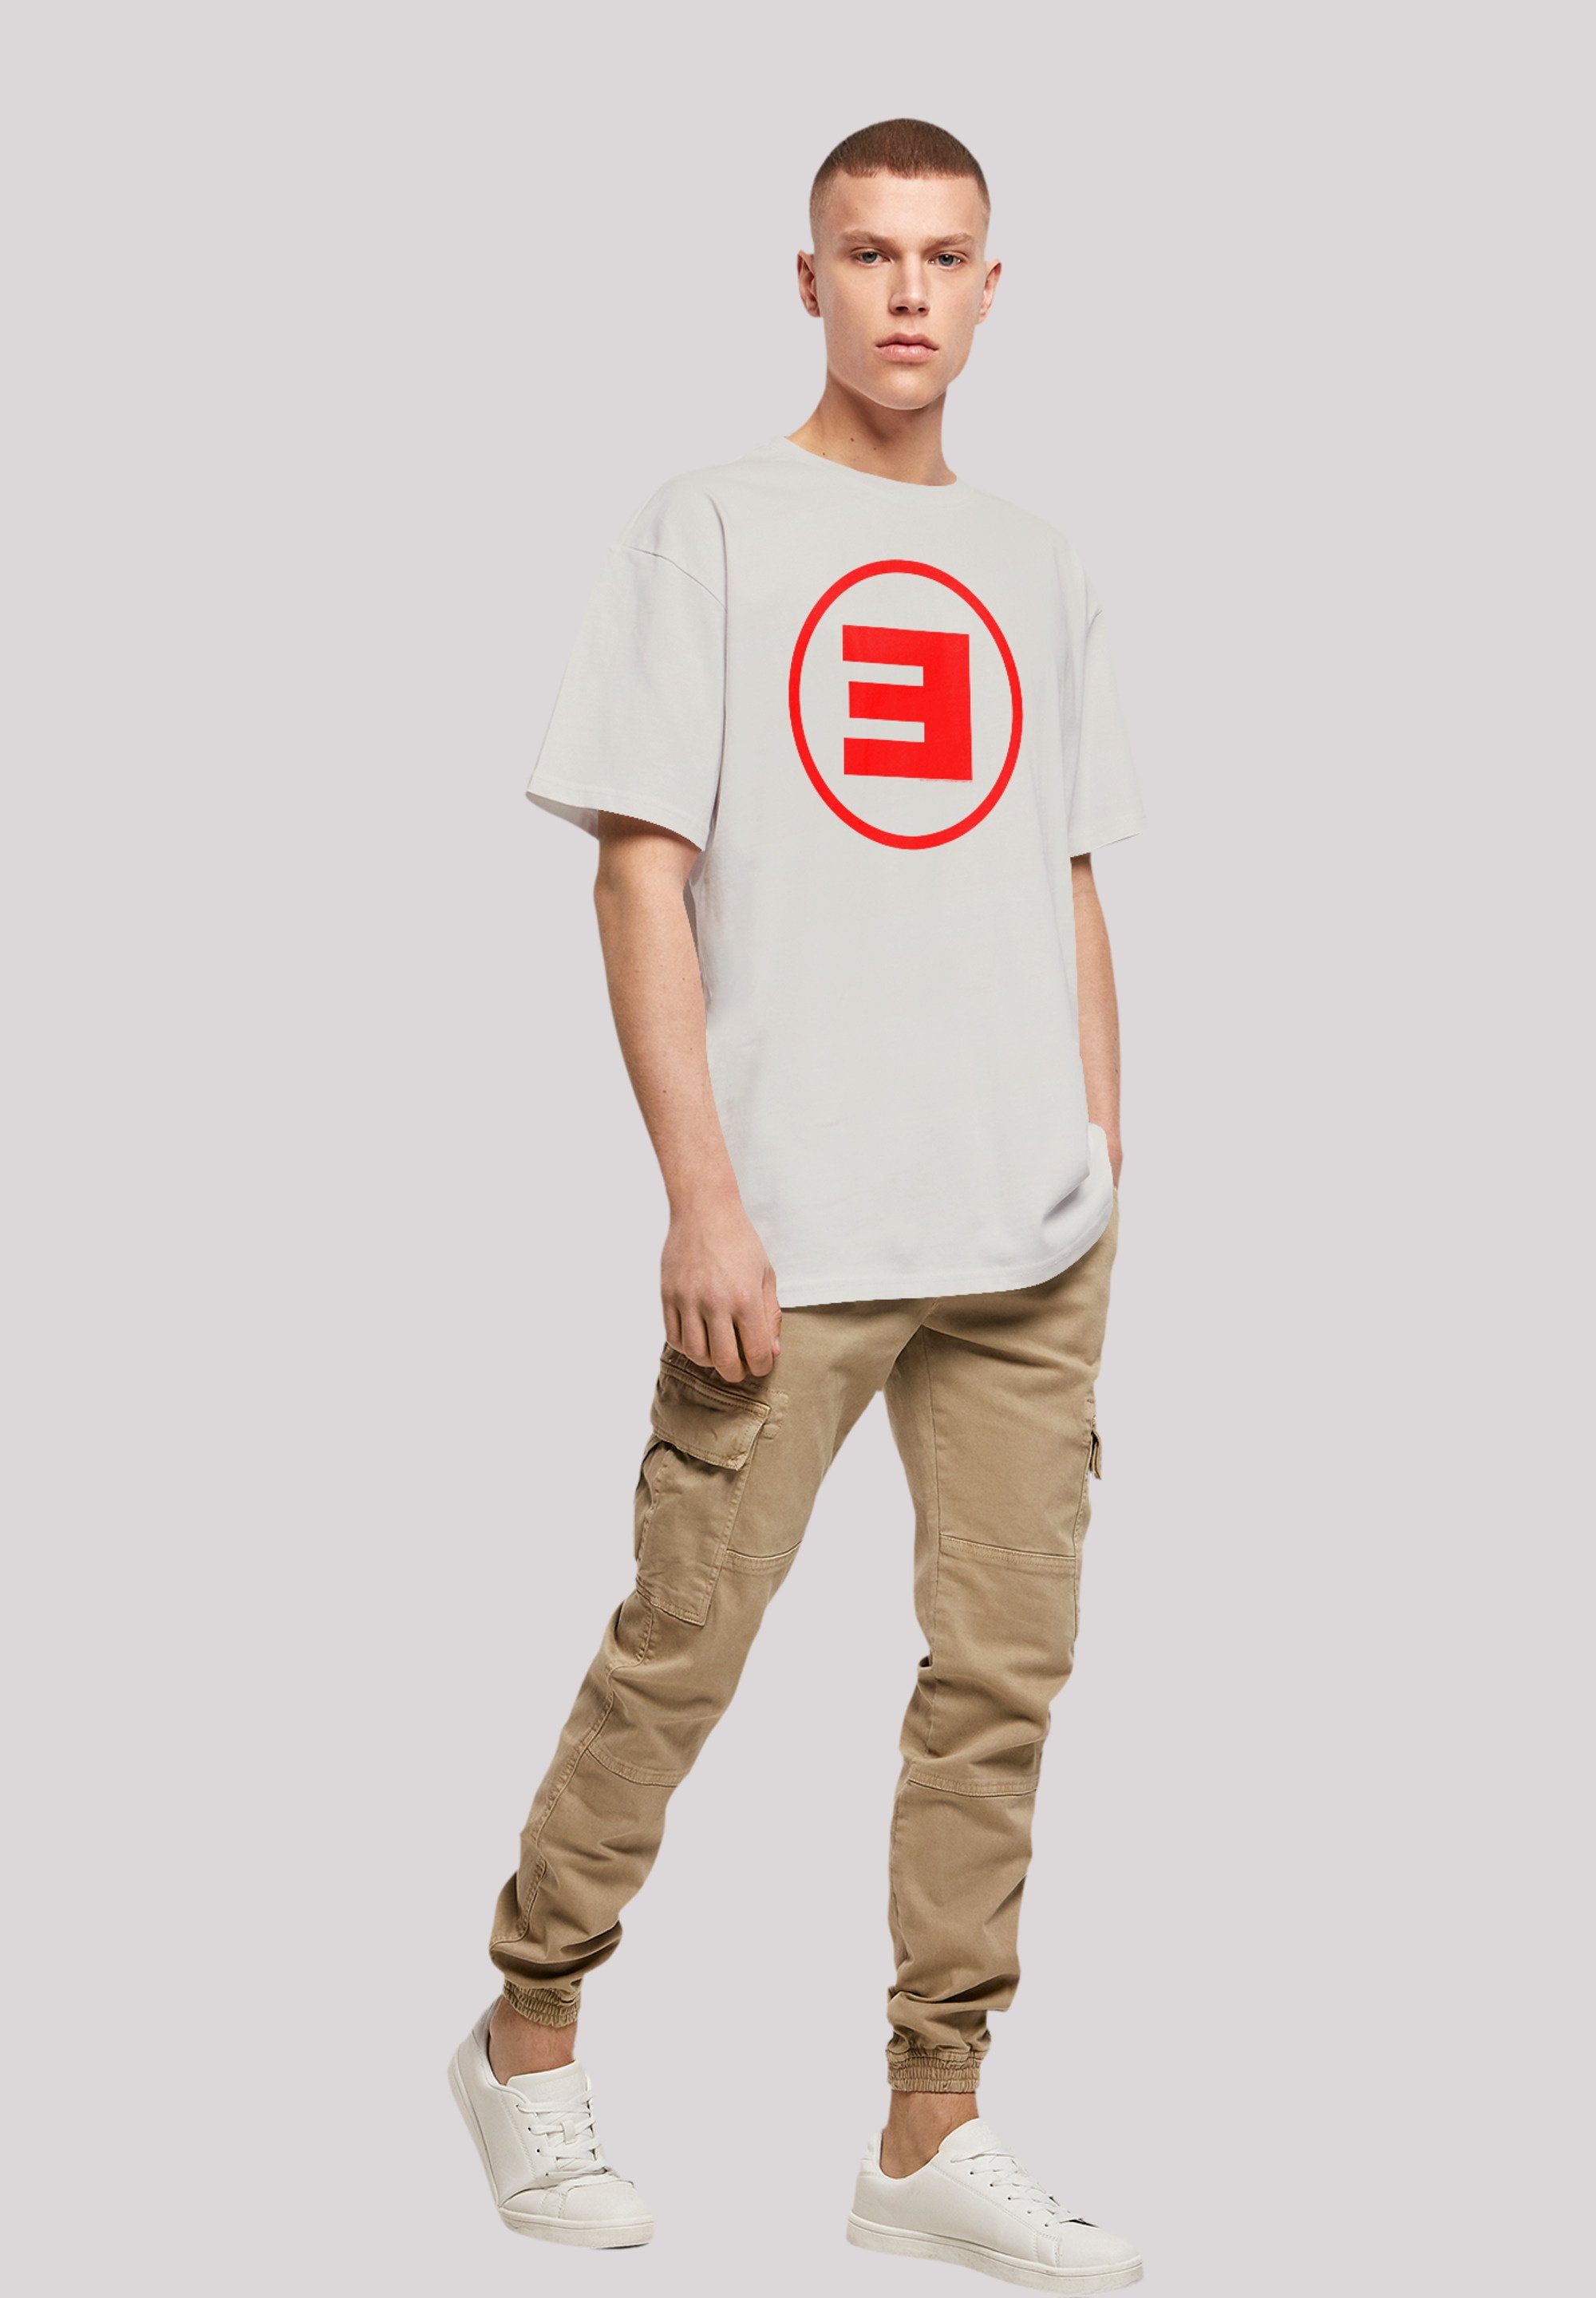 T-Shirt Music lightasphalt Premium By Rock Off Musik, E Hip Rap Qualität, Eminem Hop Circle F4NT4STIC